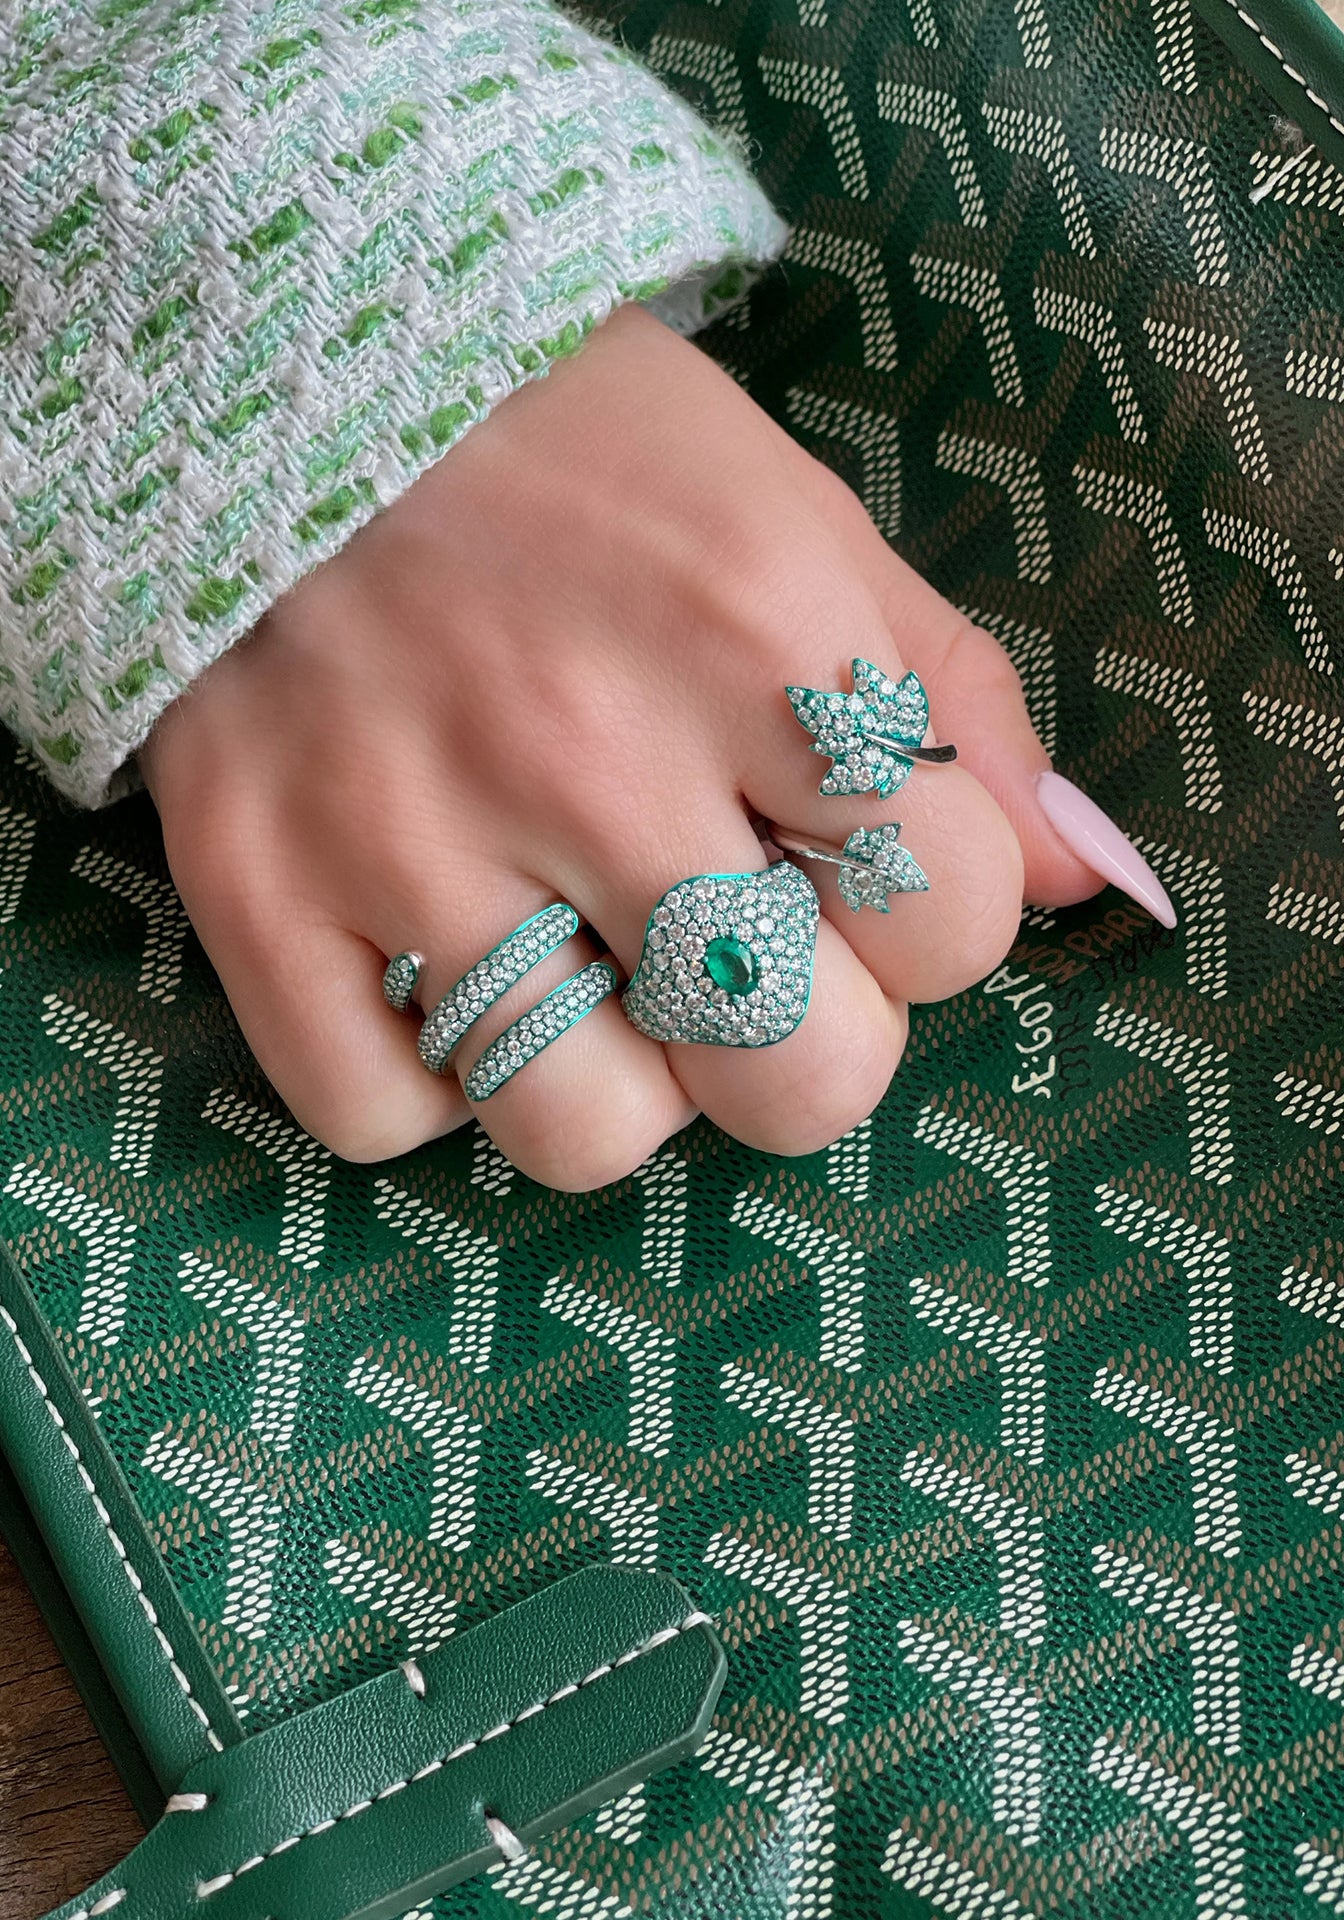 18K White Gold, Green Rhodium, Emerald + Diamond Ring